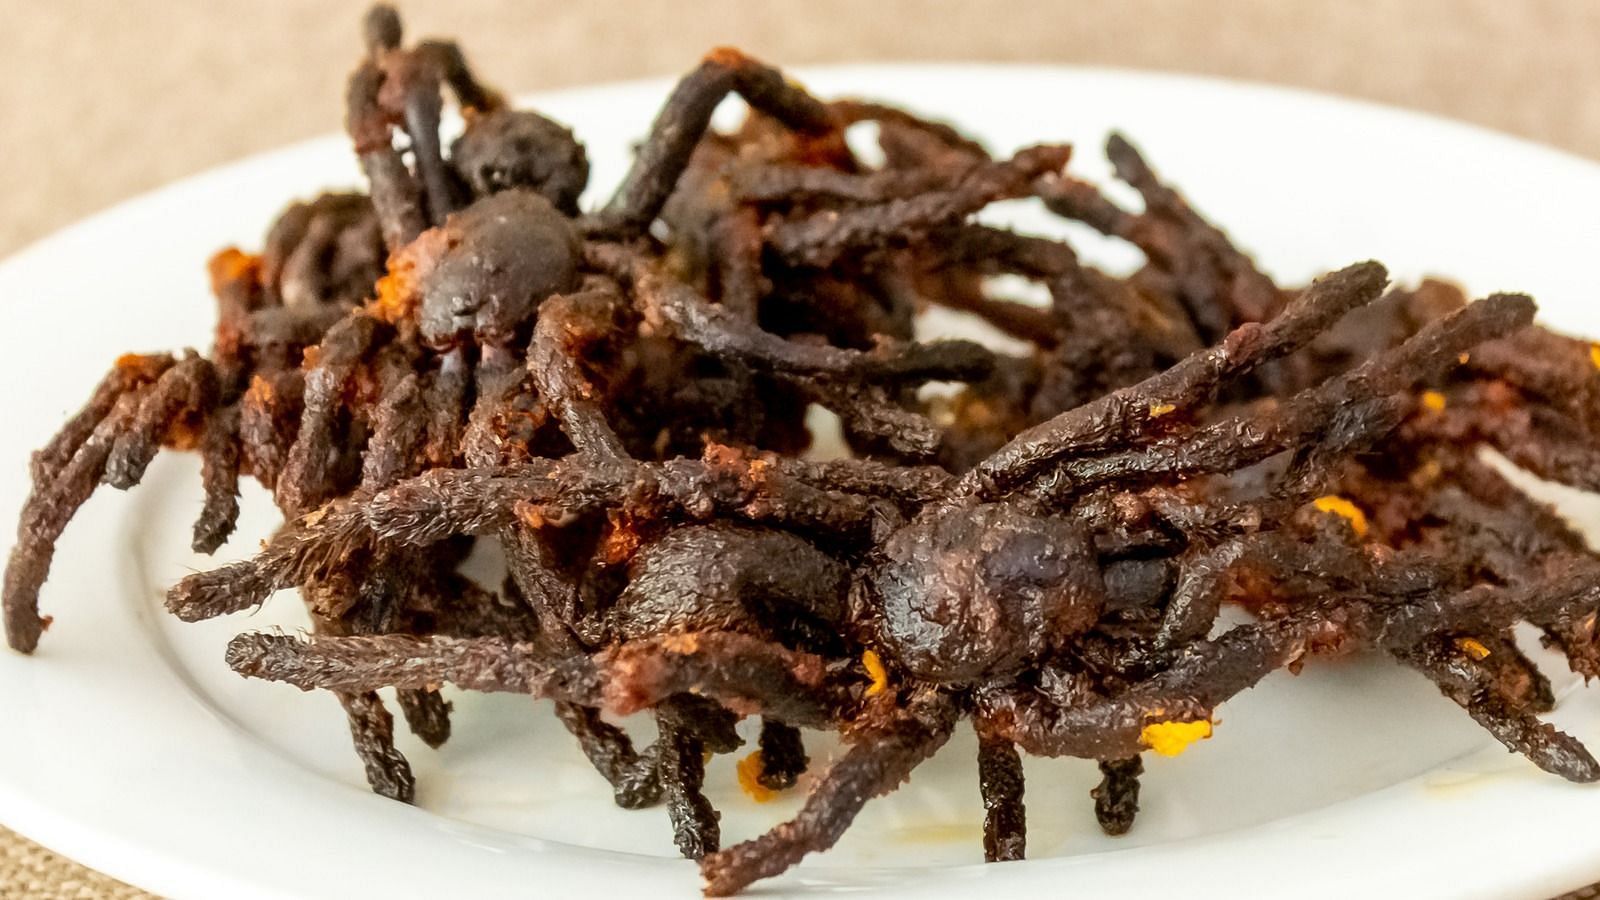 Fried Tarantulas as a disgusting food (Image via Getty Images)